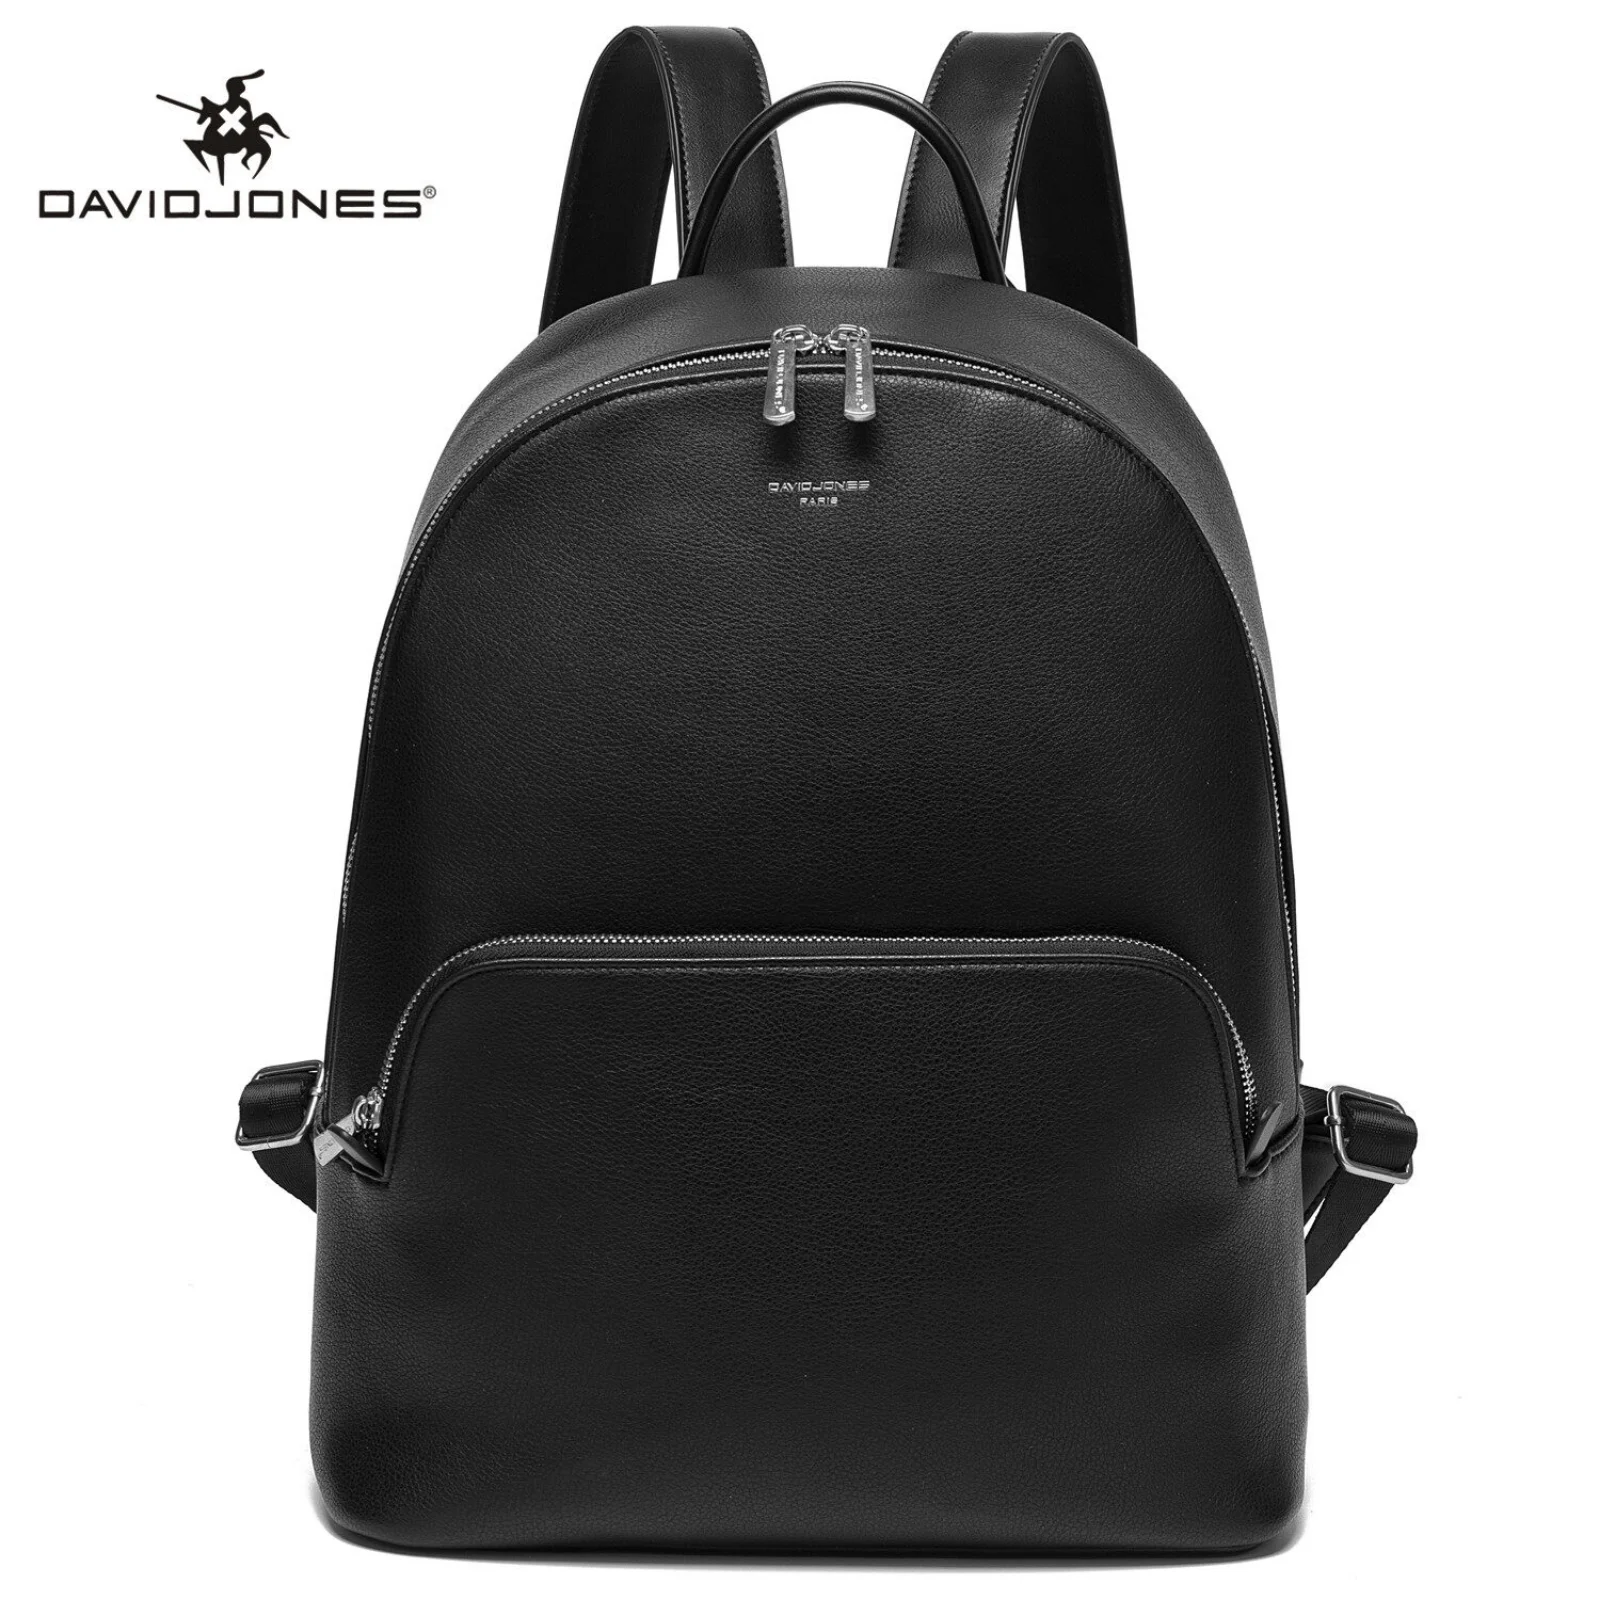 David Jones Fashion Simple And Generous Backpack Black Versatile Daily Commuting Travel High-capacity PU Leather Shoulder Bag